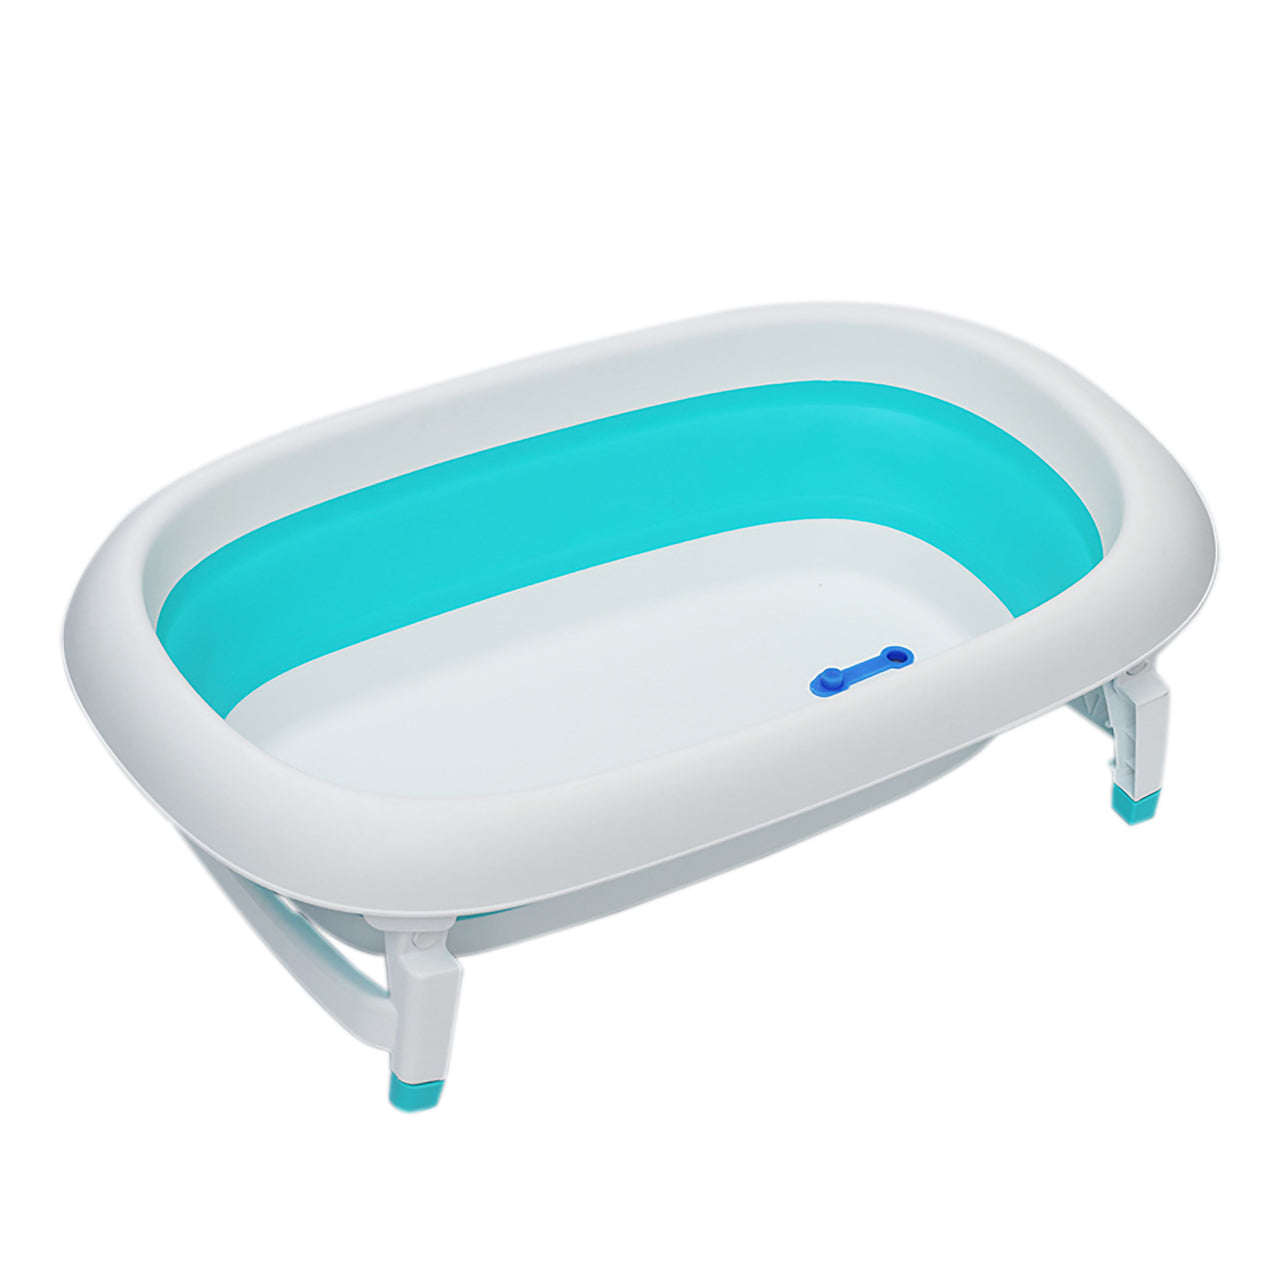 Snuggletime Collapsible Bath Tub - Aqua